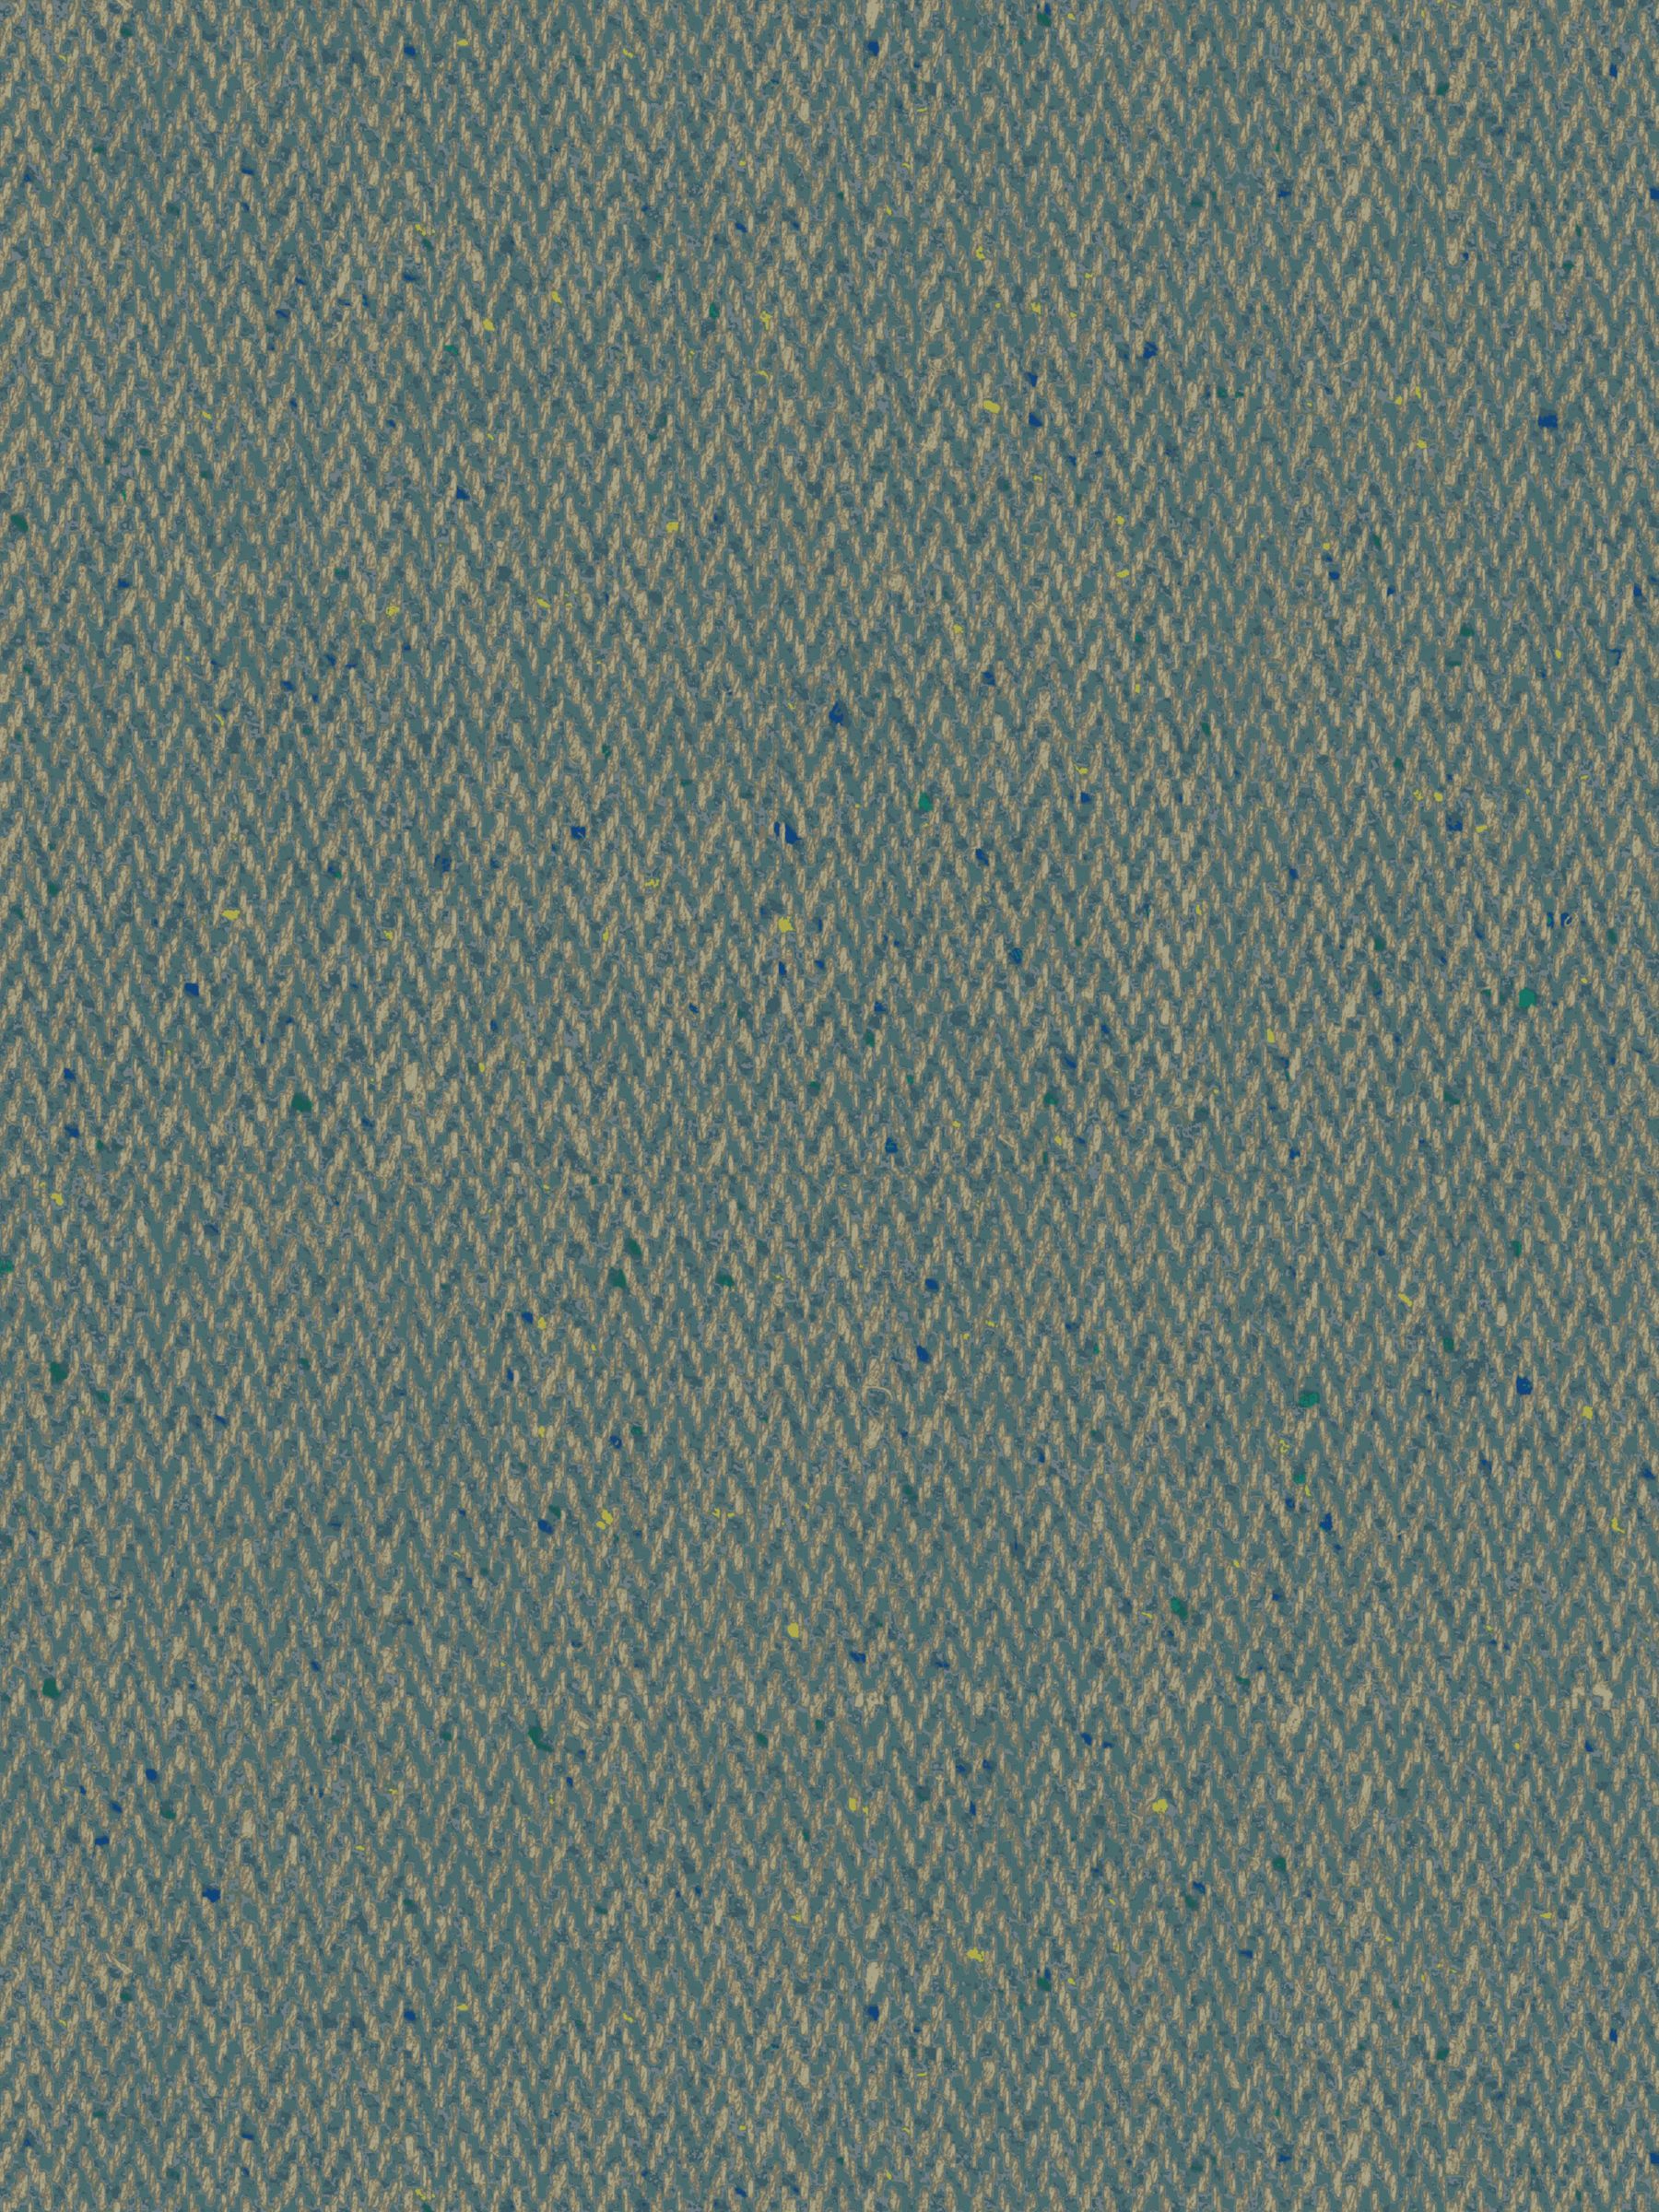 Morris & Co. Montagu Brunswick Weave Fabric, Green